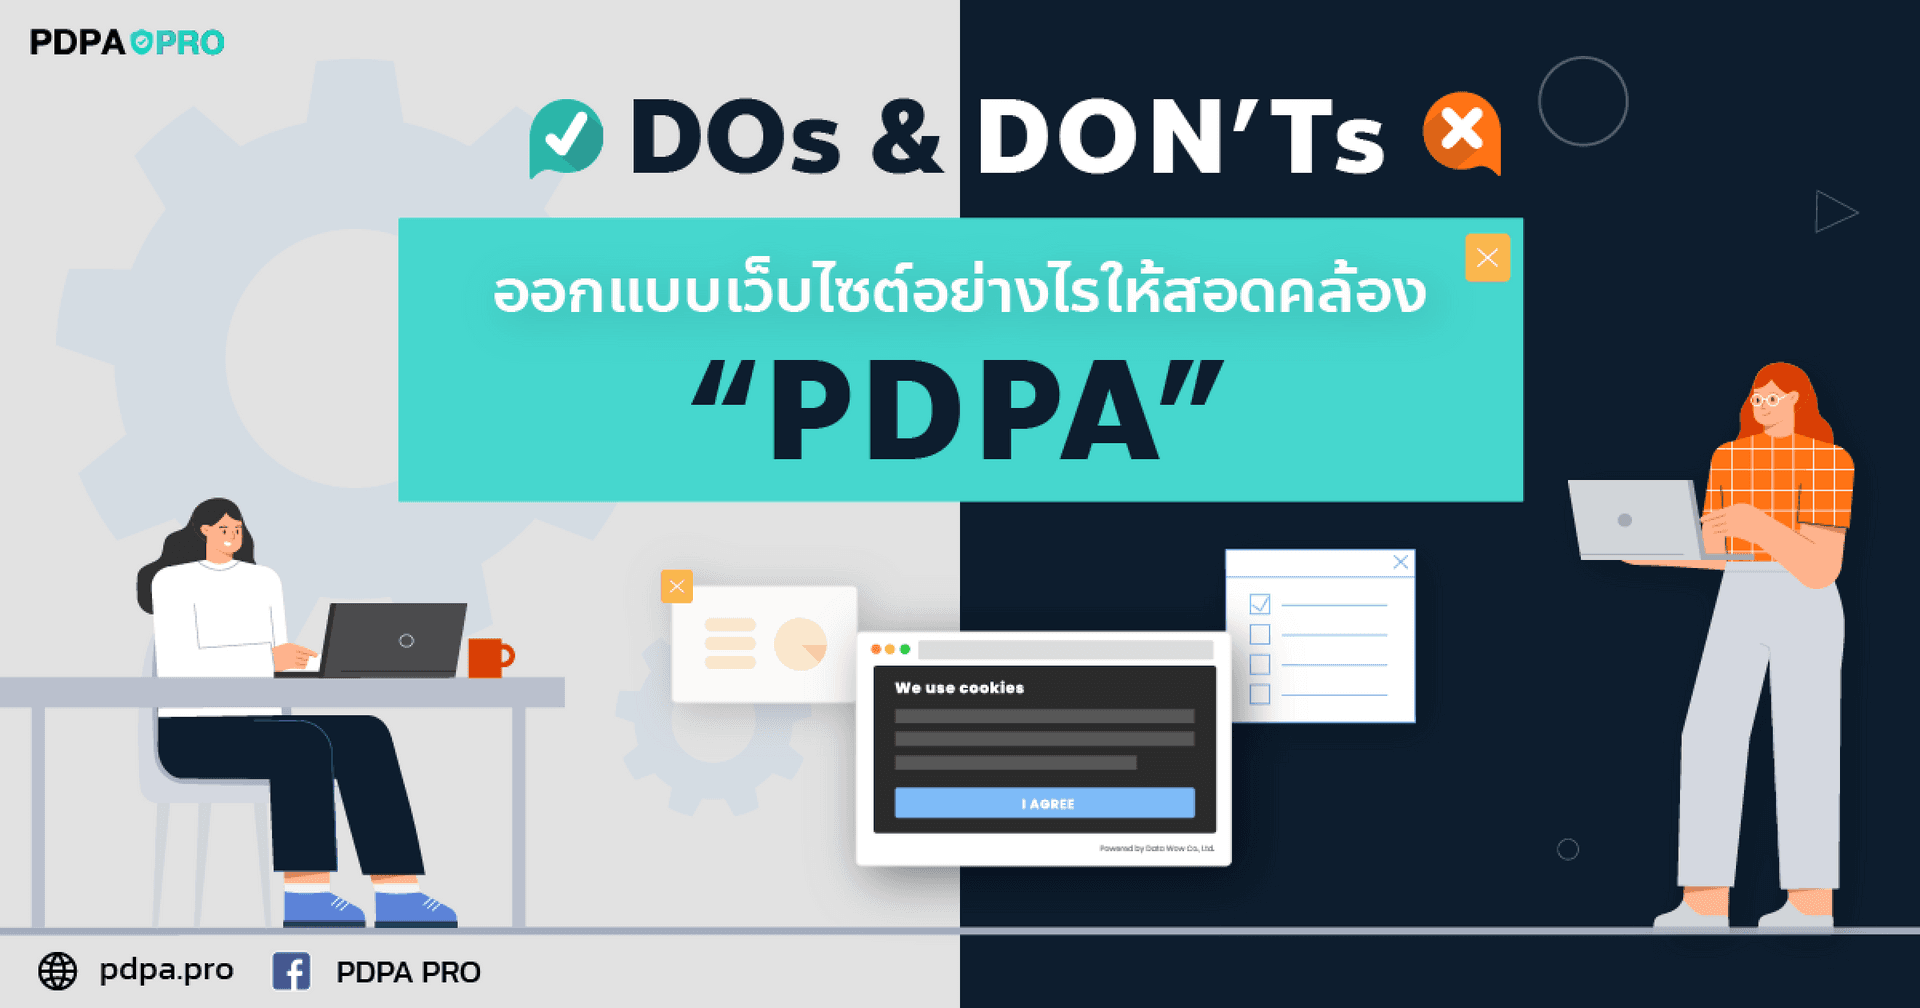 DOs & DON’Ts ออกแบบเว็บไซต์อย่างไรให้สอดคล้อง PDPA